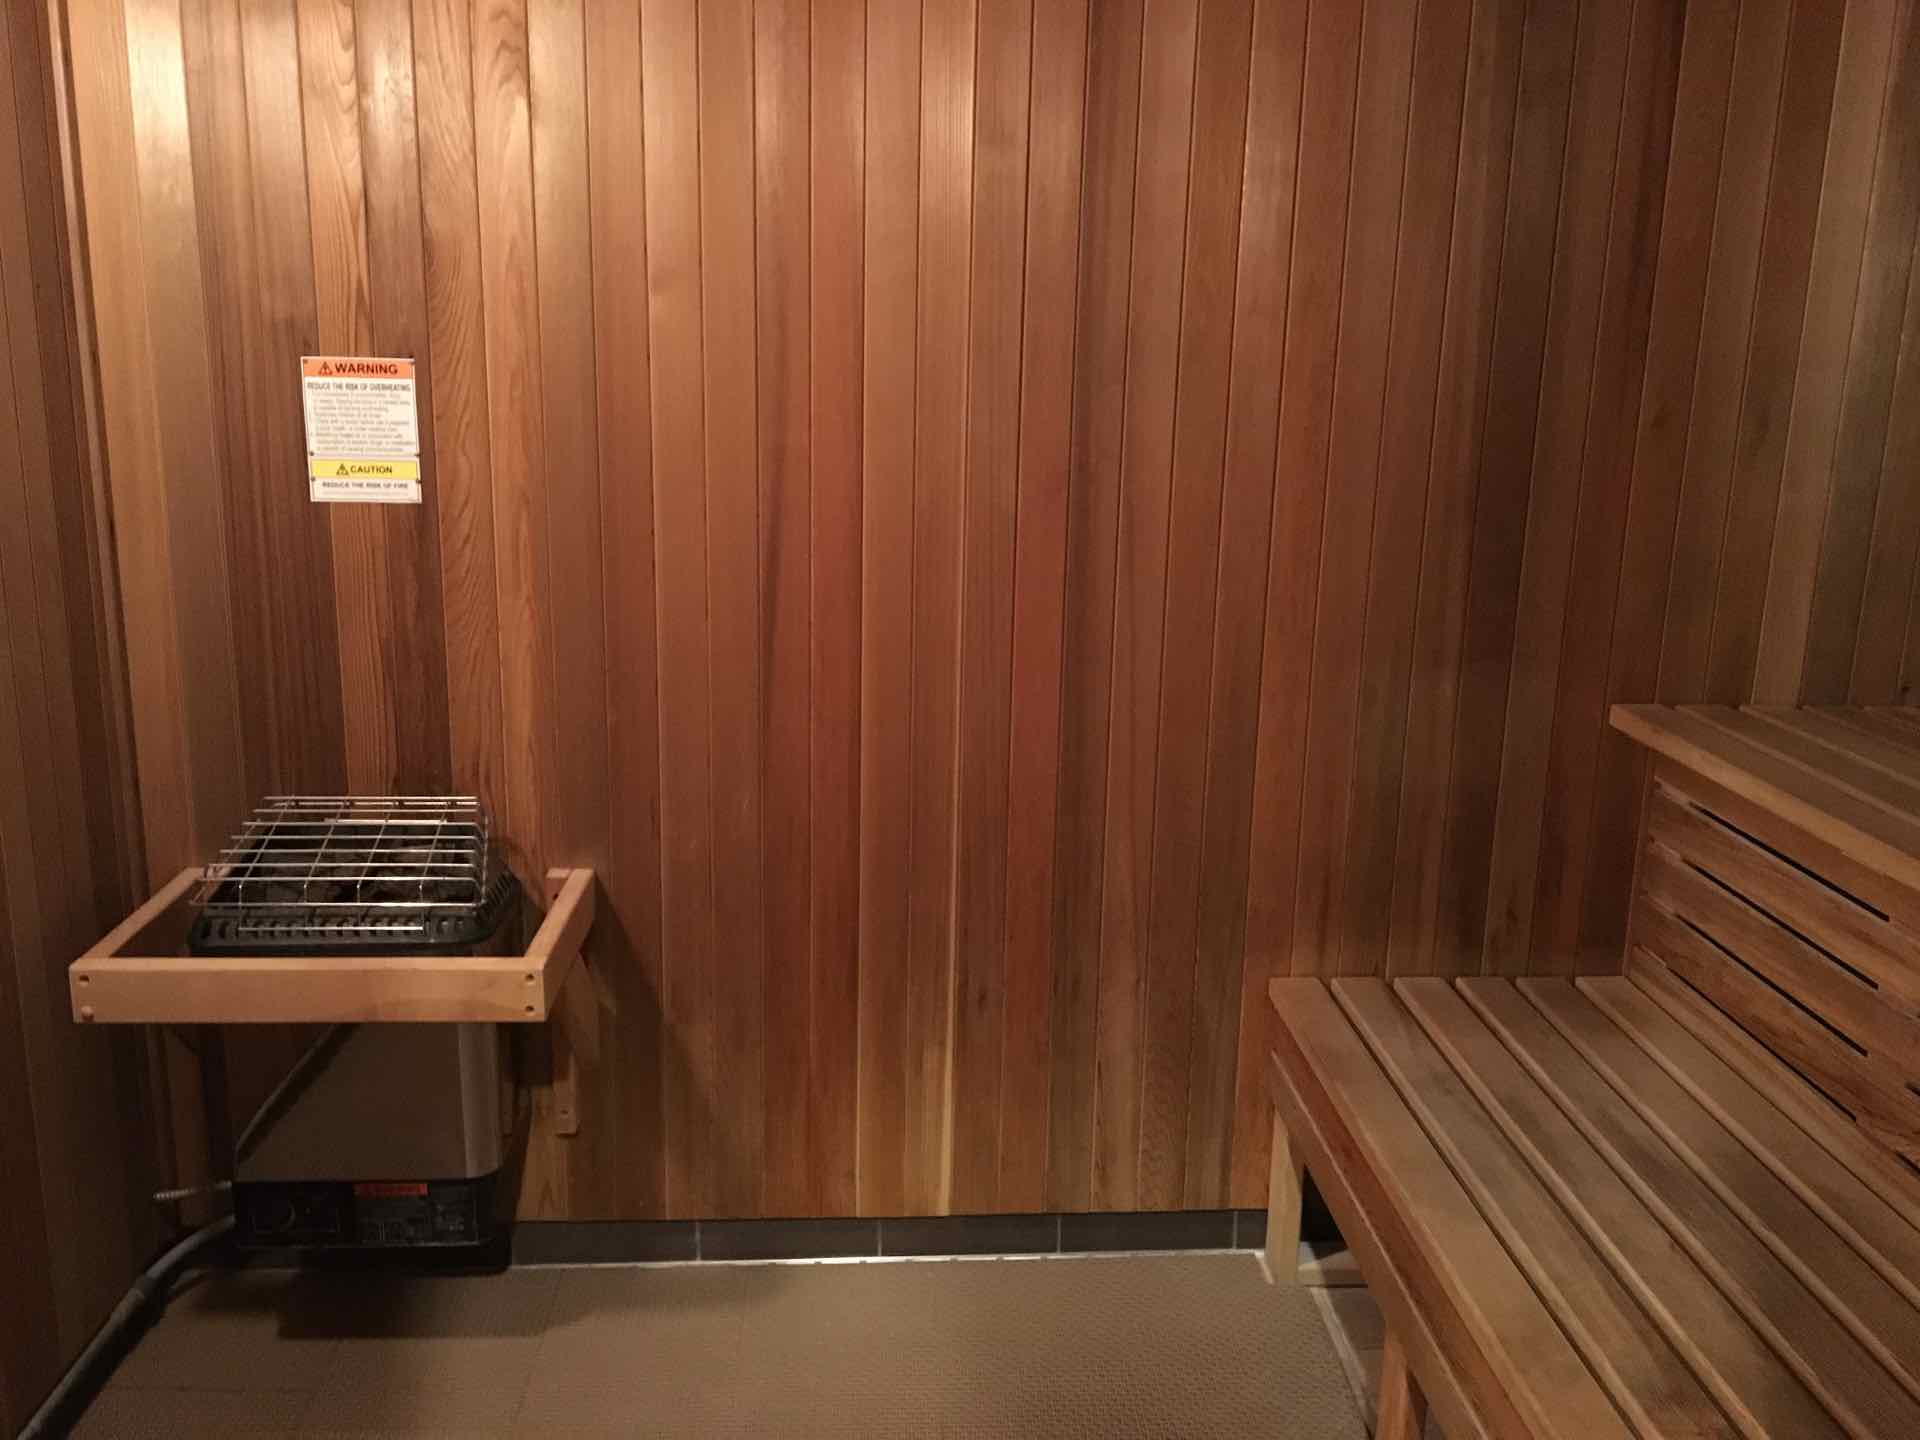 Sauna located next to fitness center